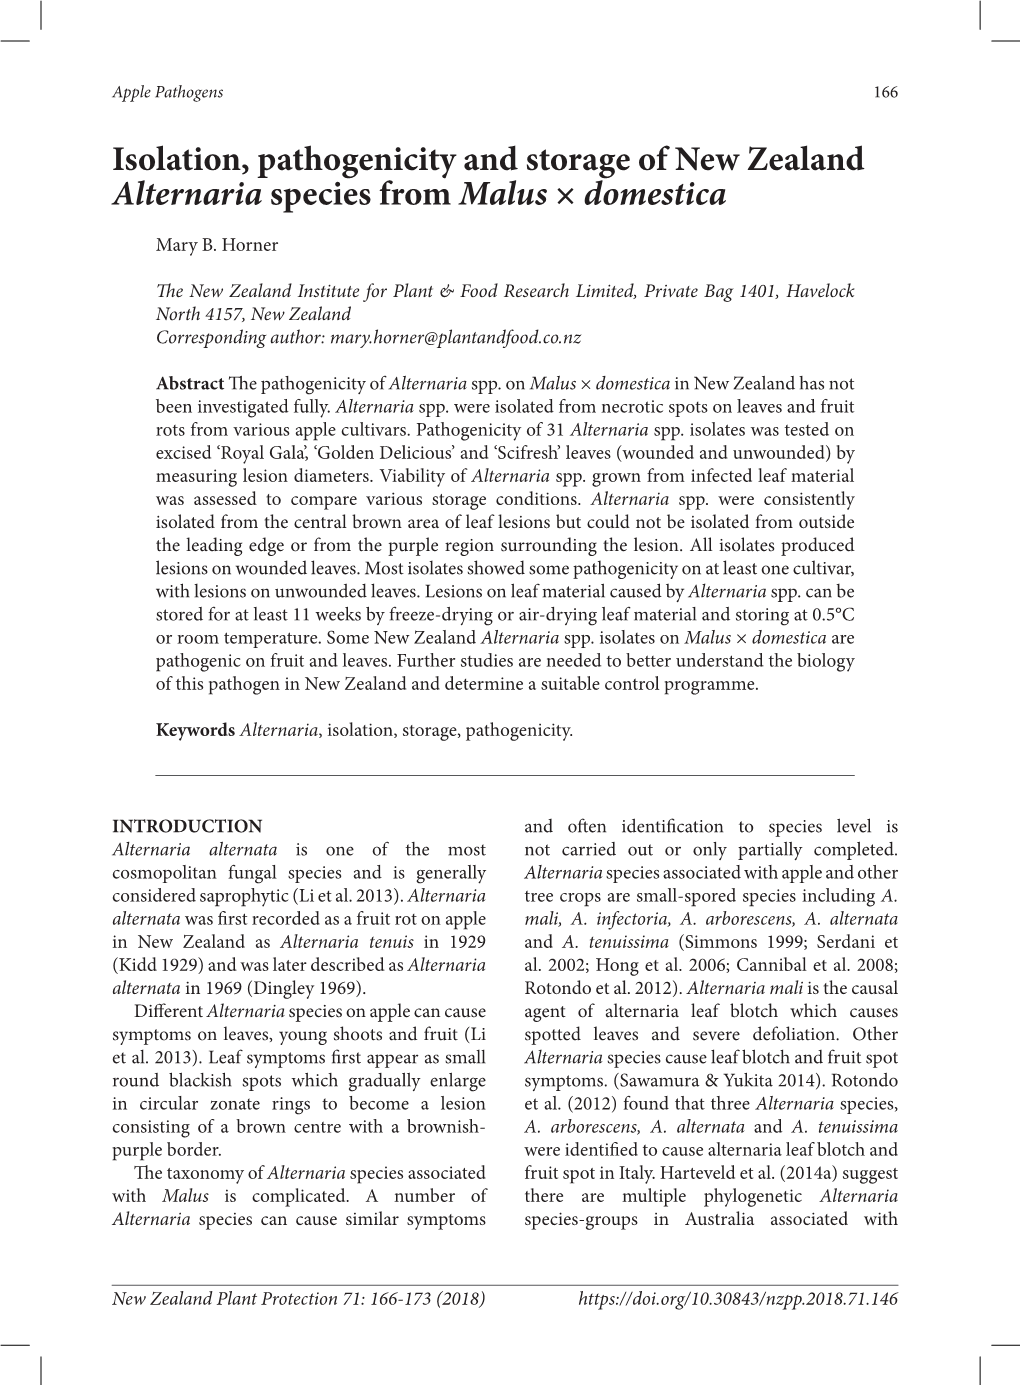 Isolation, Pathogenicity and Storage of New Zealand Alternaria Species